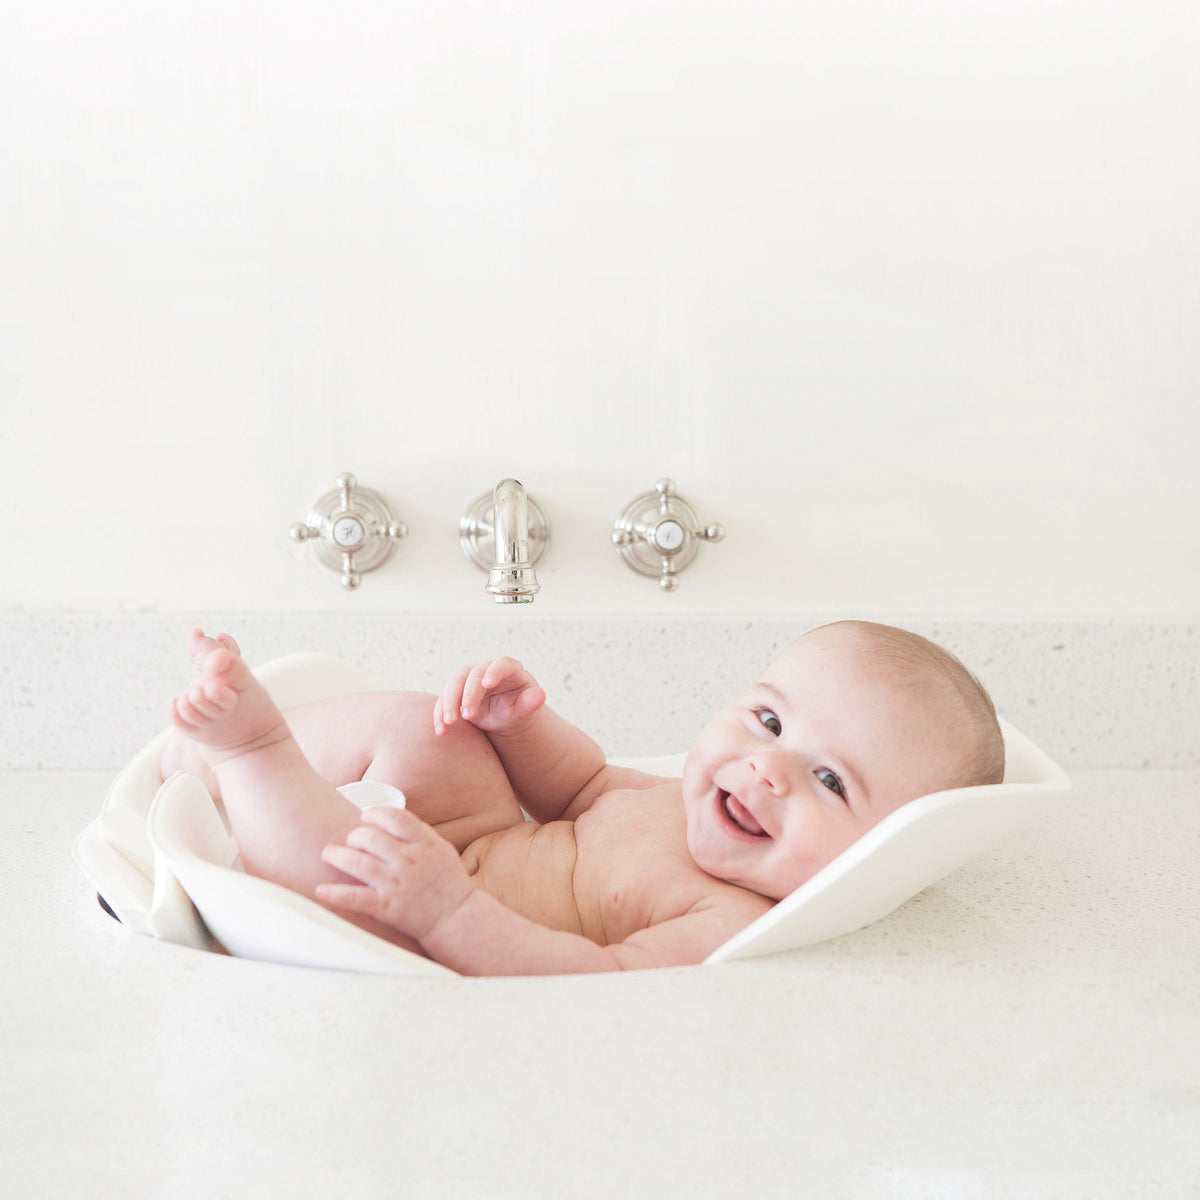 Pju white infant tub in lifestyle imagine